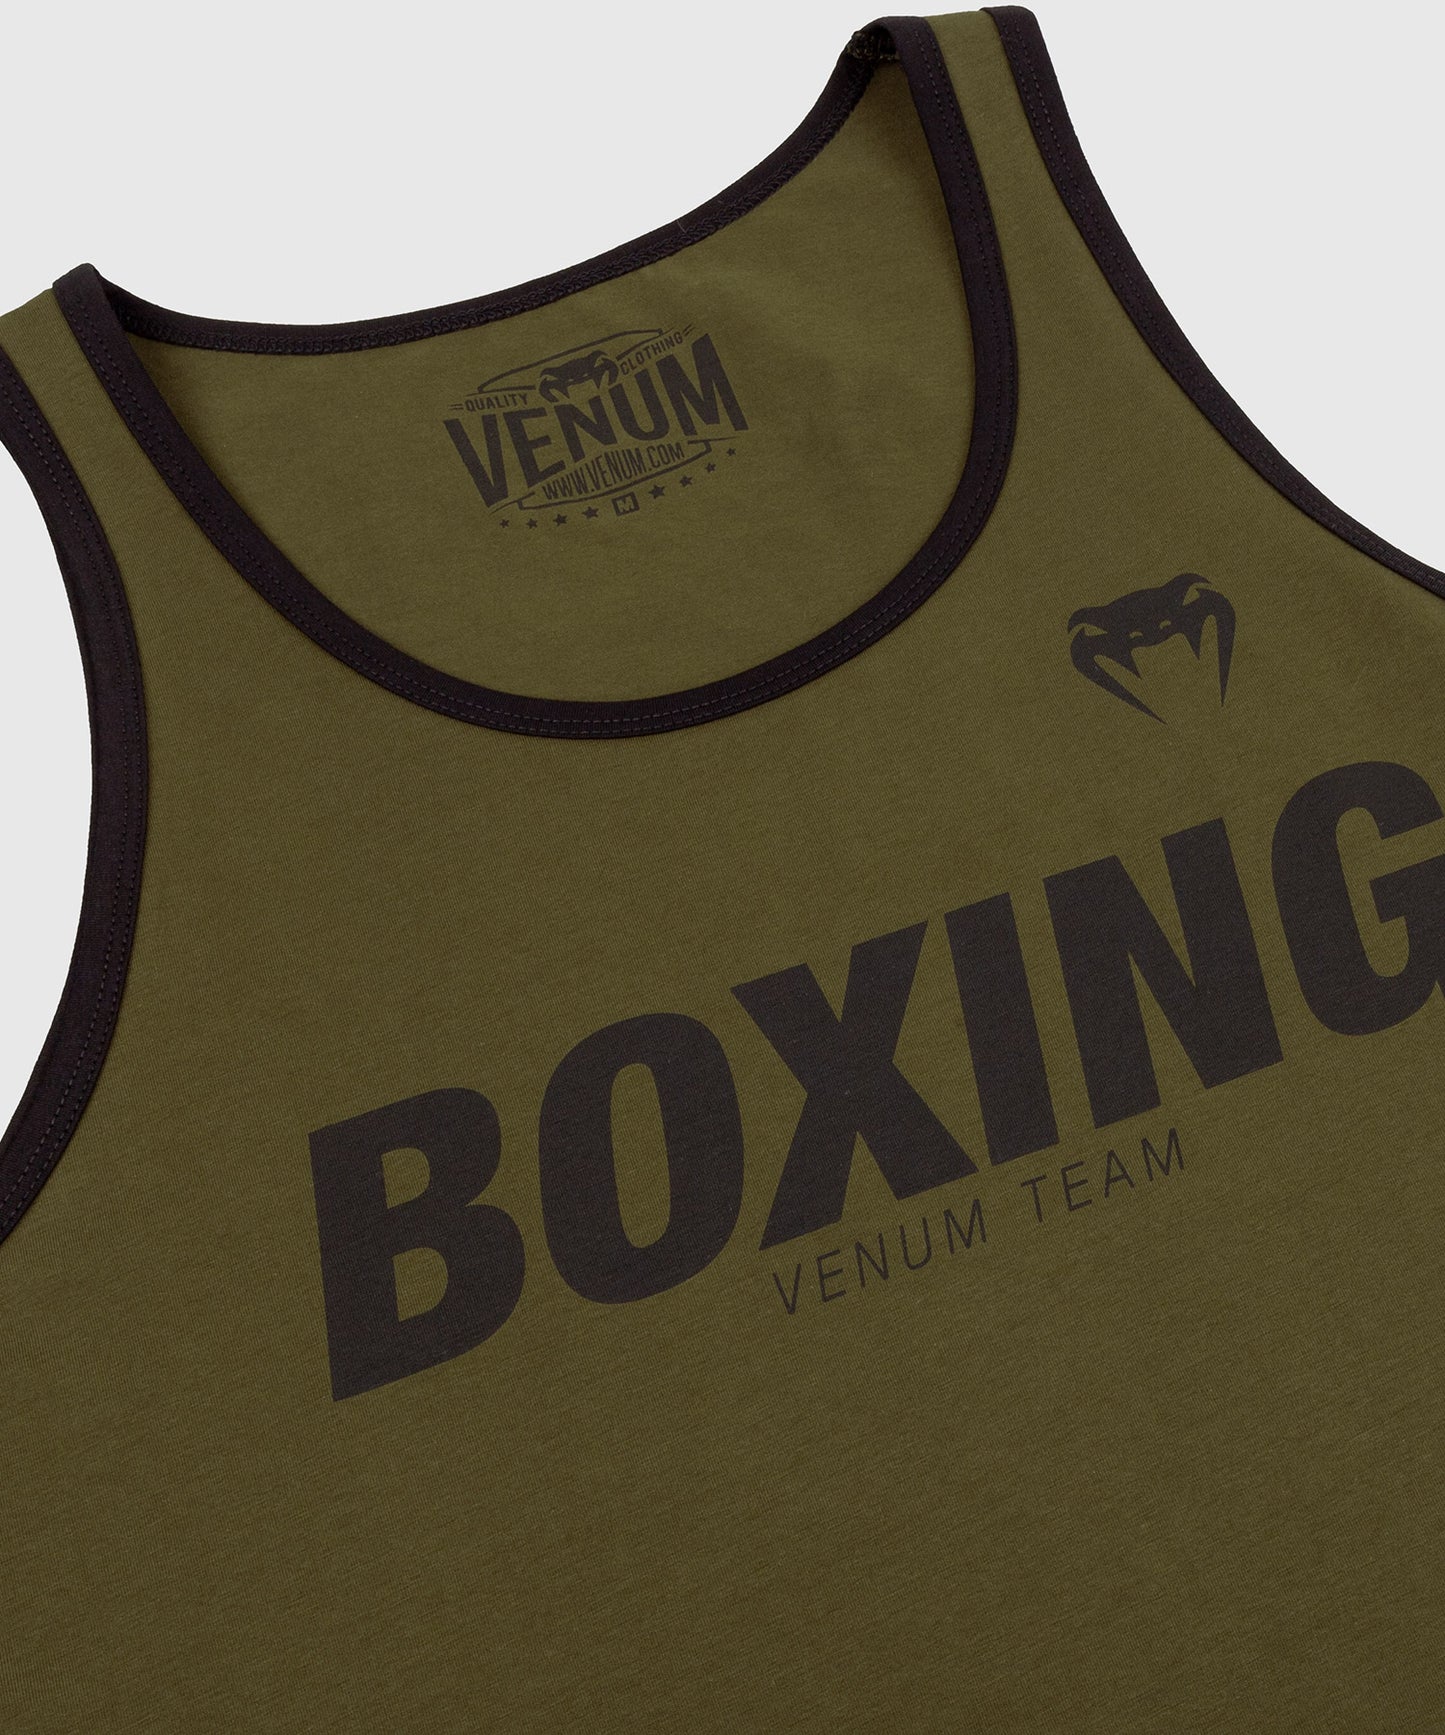 Canotta Boxing VT Venum - Cachi/Nero